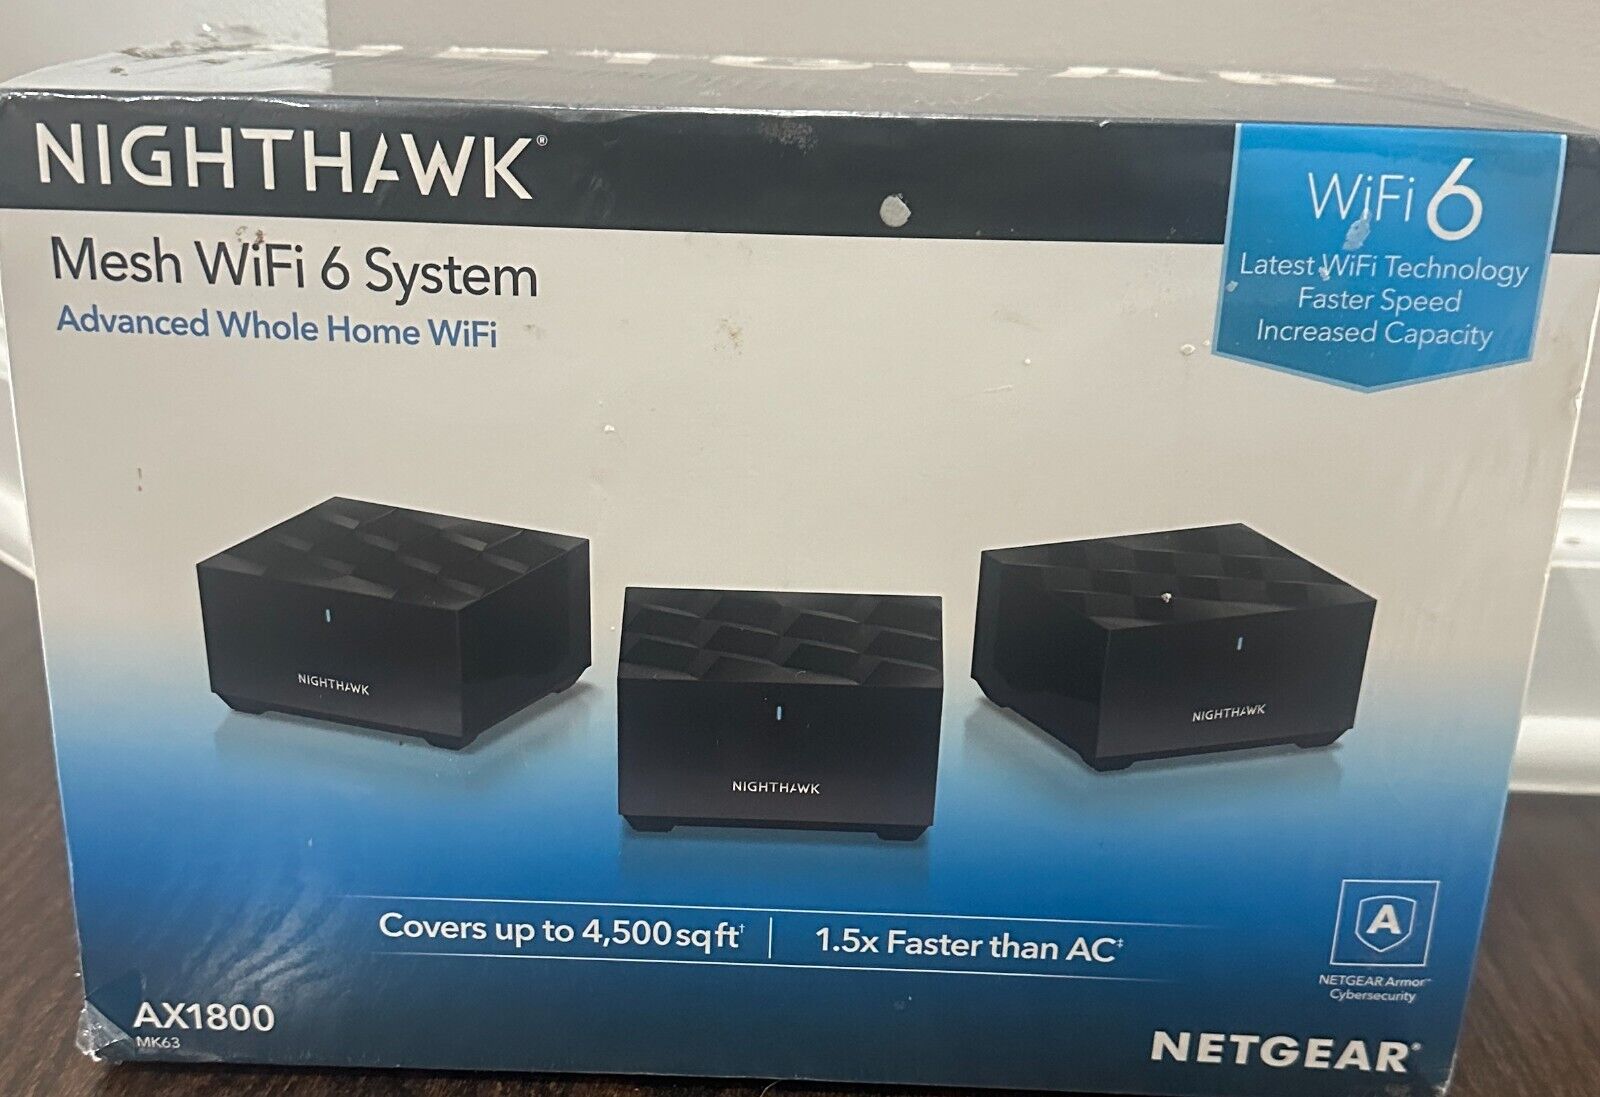 NETGEAR Nighthawk Wi-Fi 6 System - Pack of 3